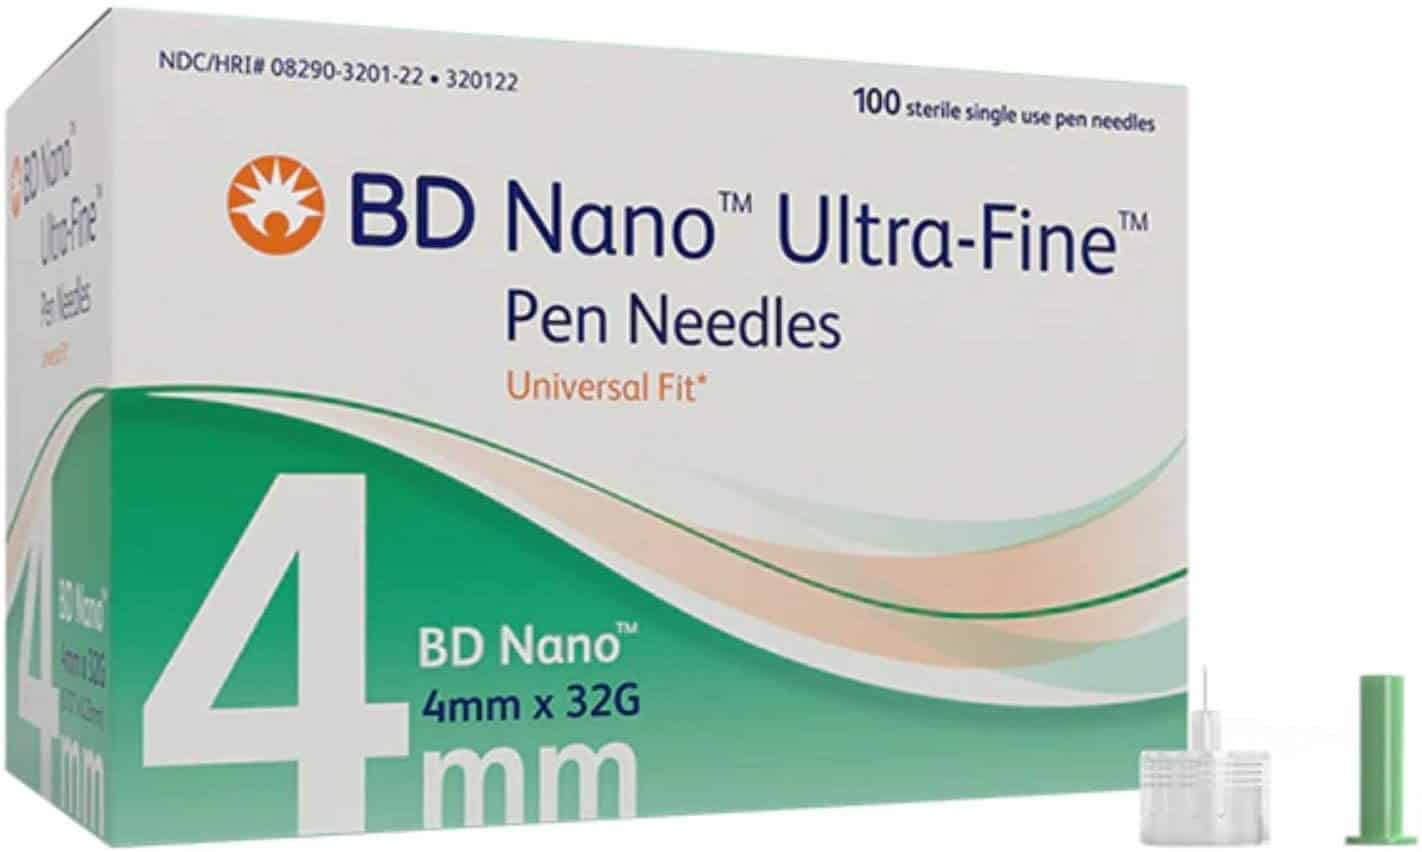 Pharmasave  Shop Online for Health, Beauty, Home & more. BD ULTRA-FINE PEN  NEEDLE NANO 4MM X 32G 100S